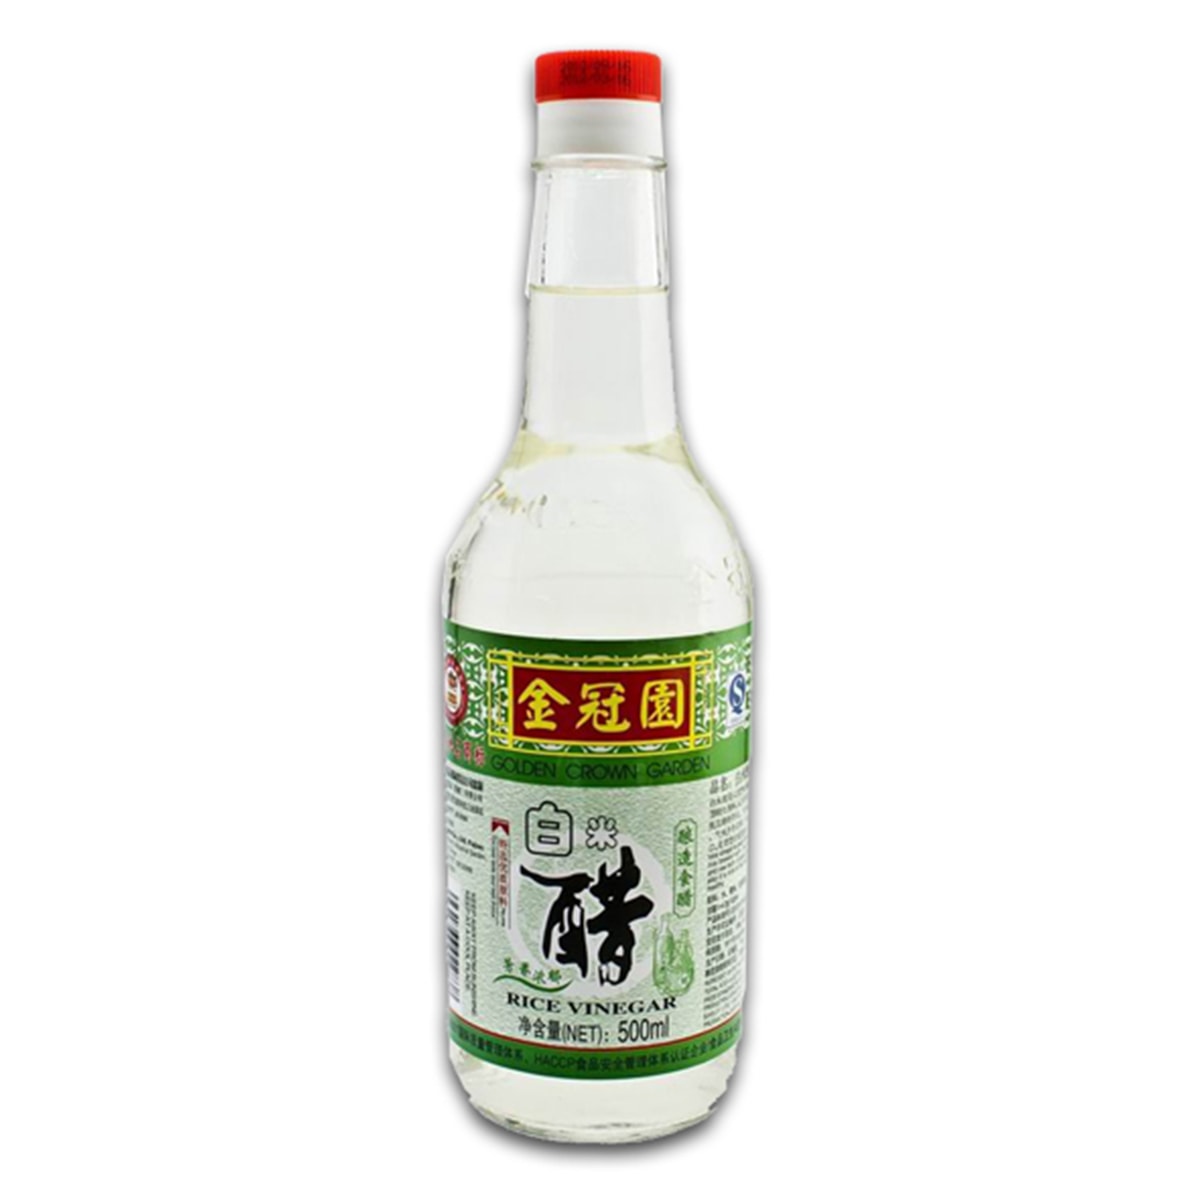 Buy Golden Crown Garden Rice Vinegar - 500 ml